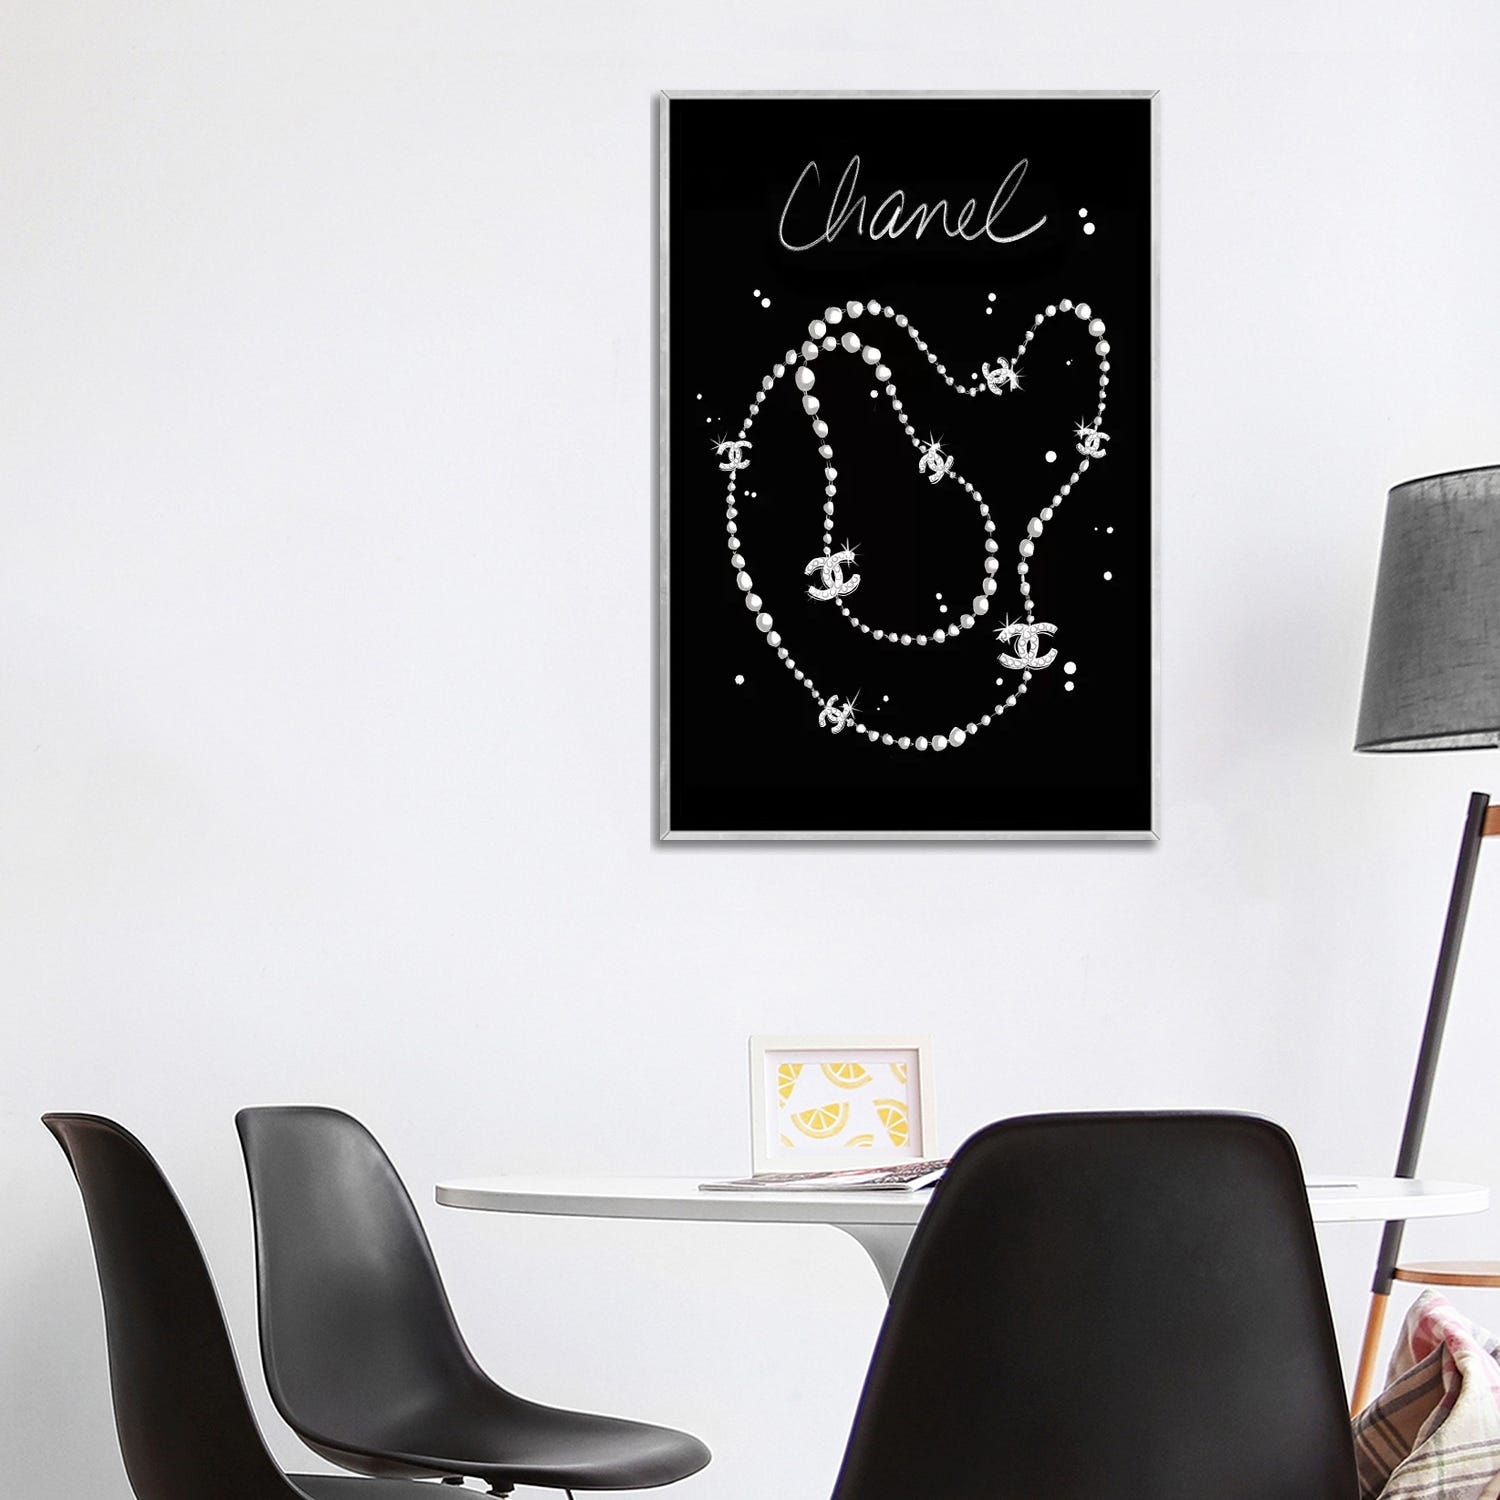 iCanvas Chanel Necklace by La femme Jojo Framed - Bed Bath & Beyond -  37675870